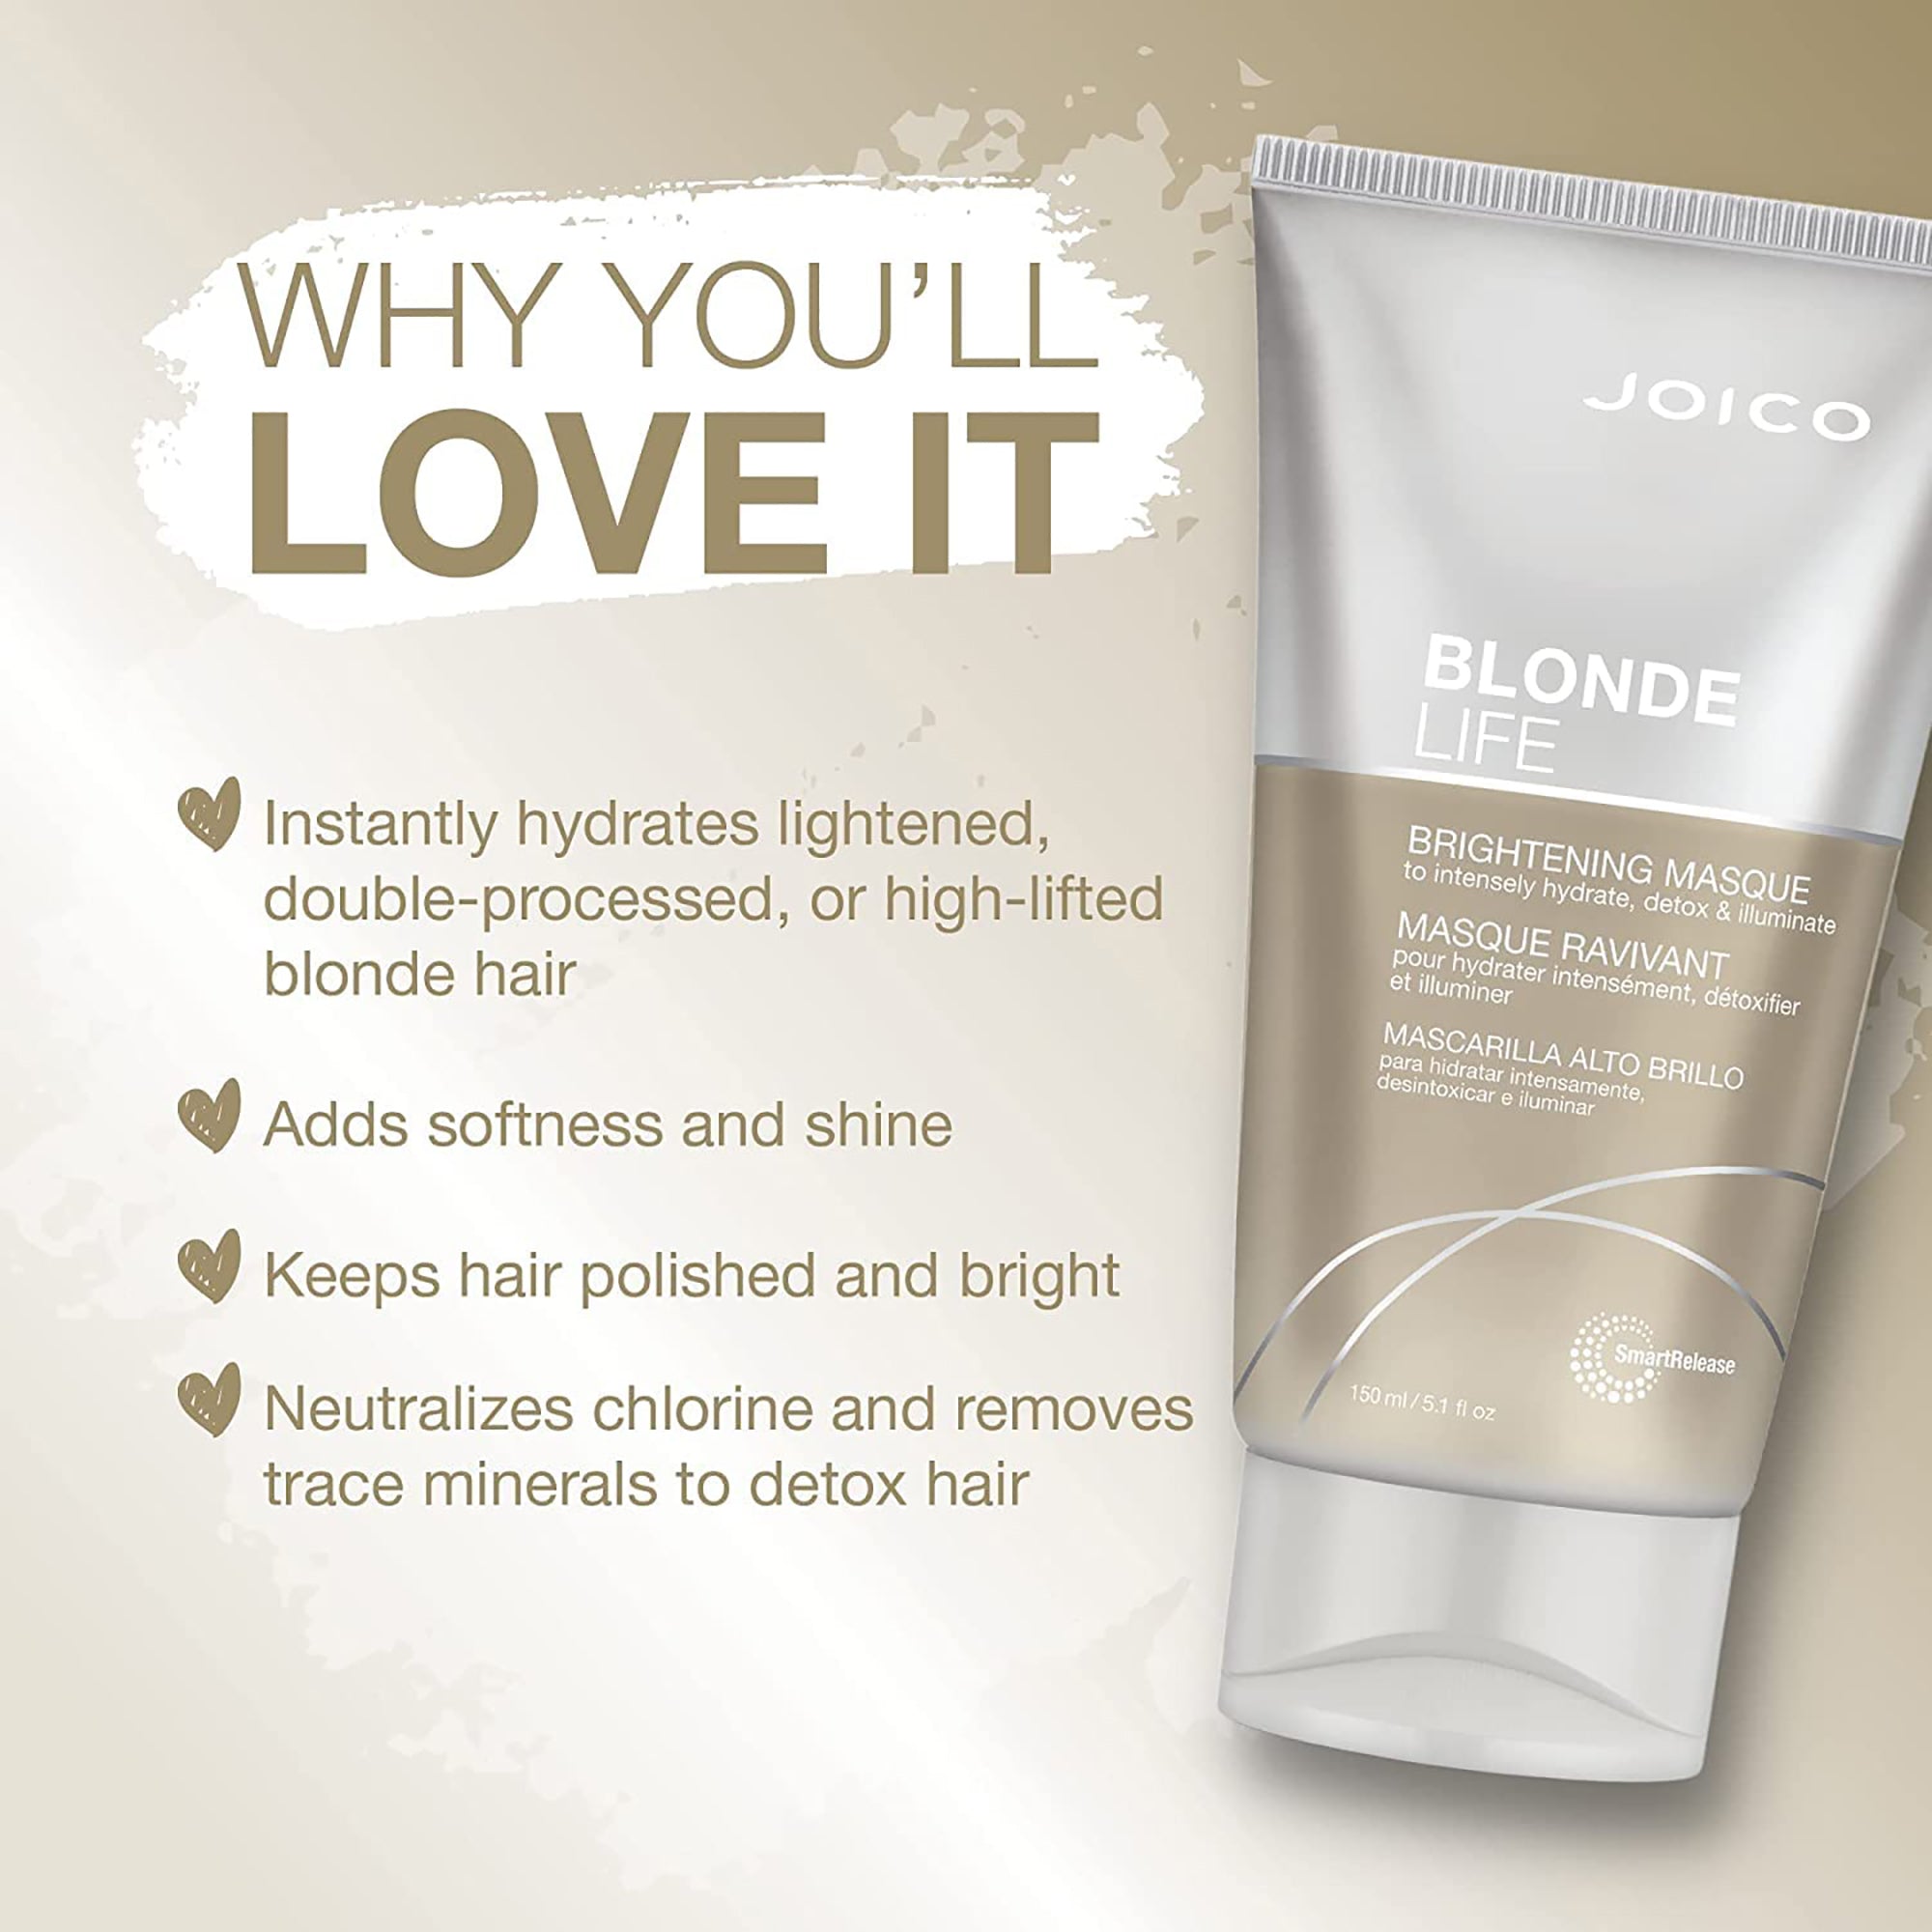 Joico Blonde Life Brightening Masque / 5.1OZ